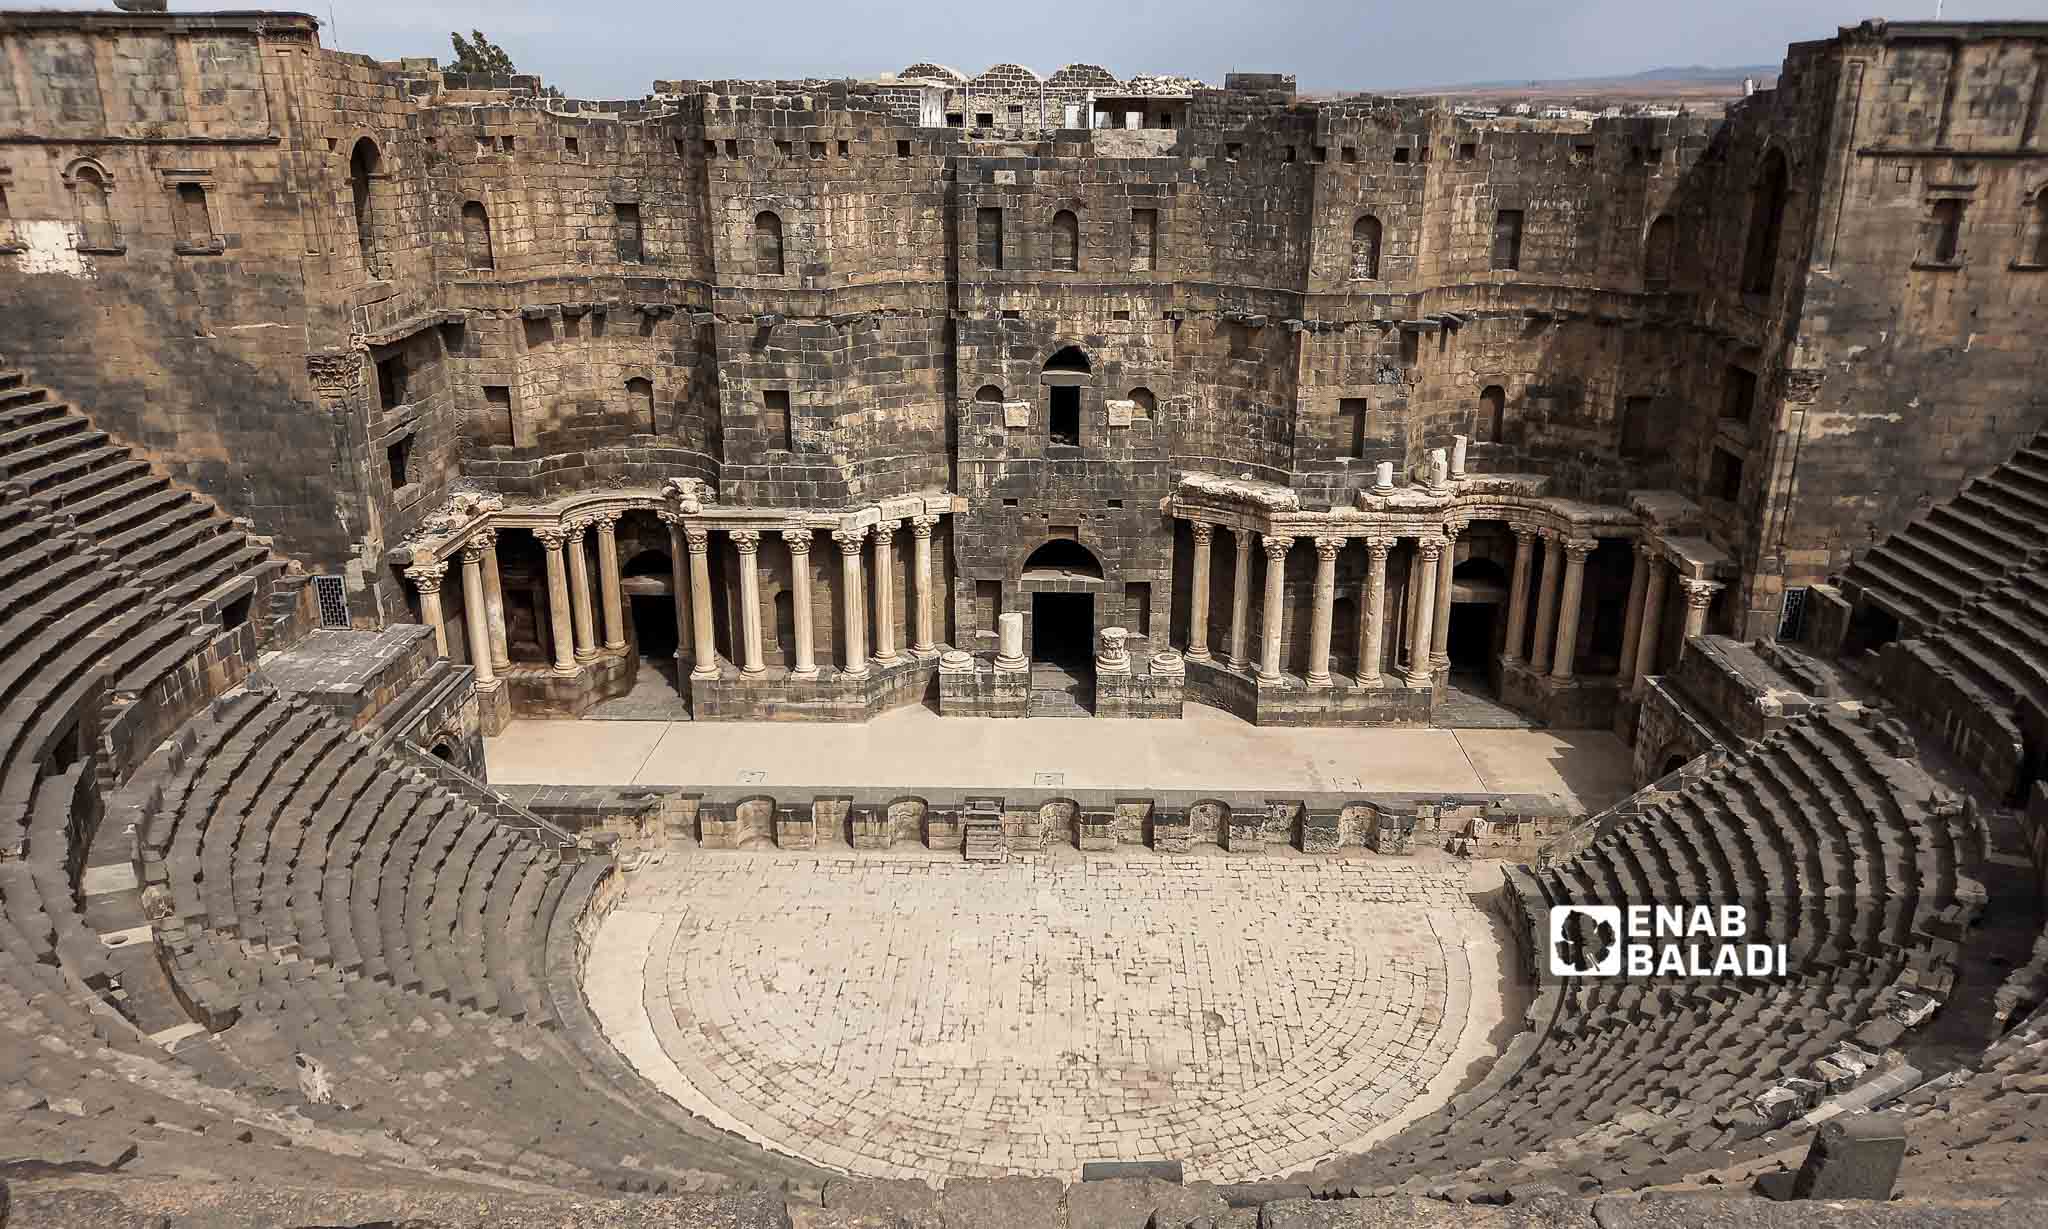 Busra al-Sham Amphitheater in Daraa governorate, southern Syria - October 13, 2023 (Enab Baladi/Sarah al-Ahmad)
